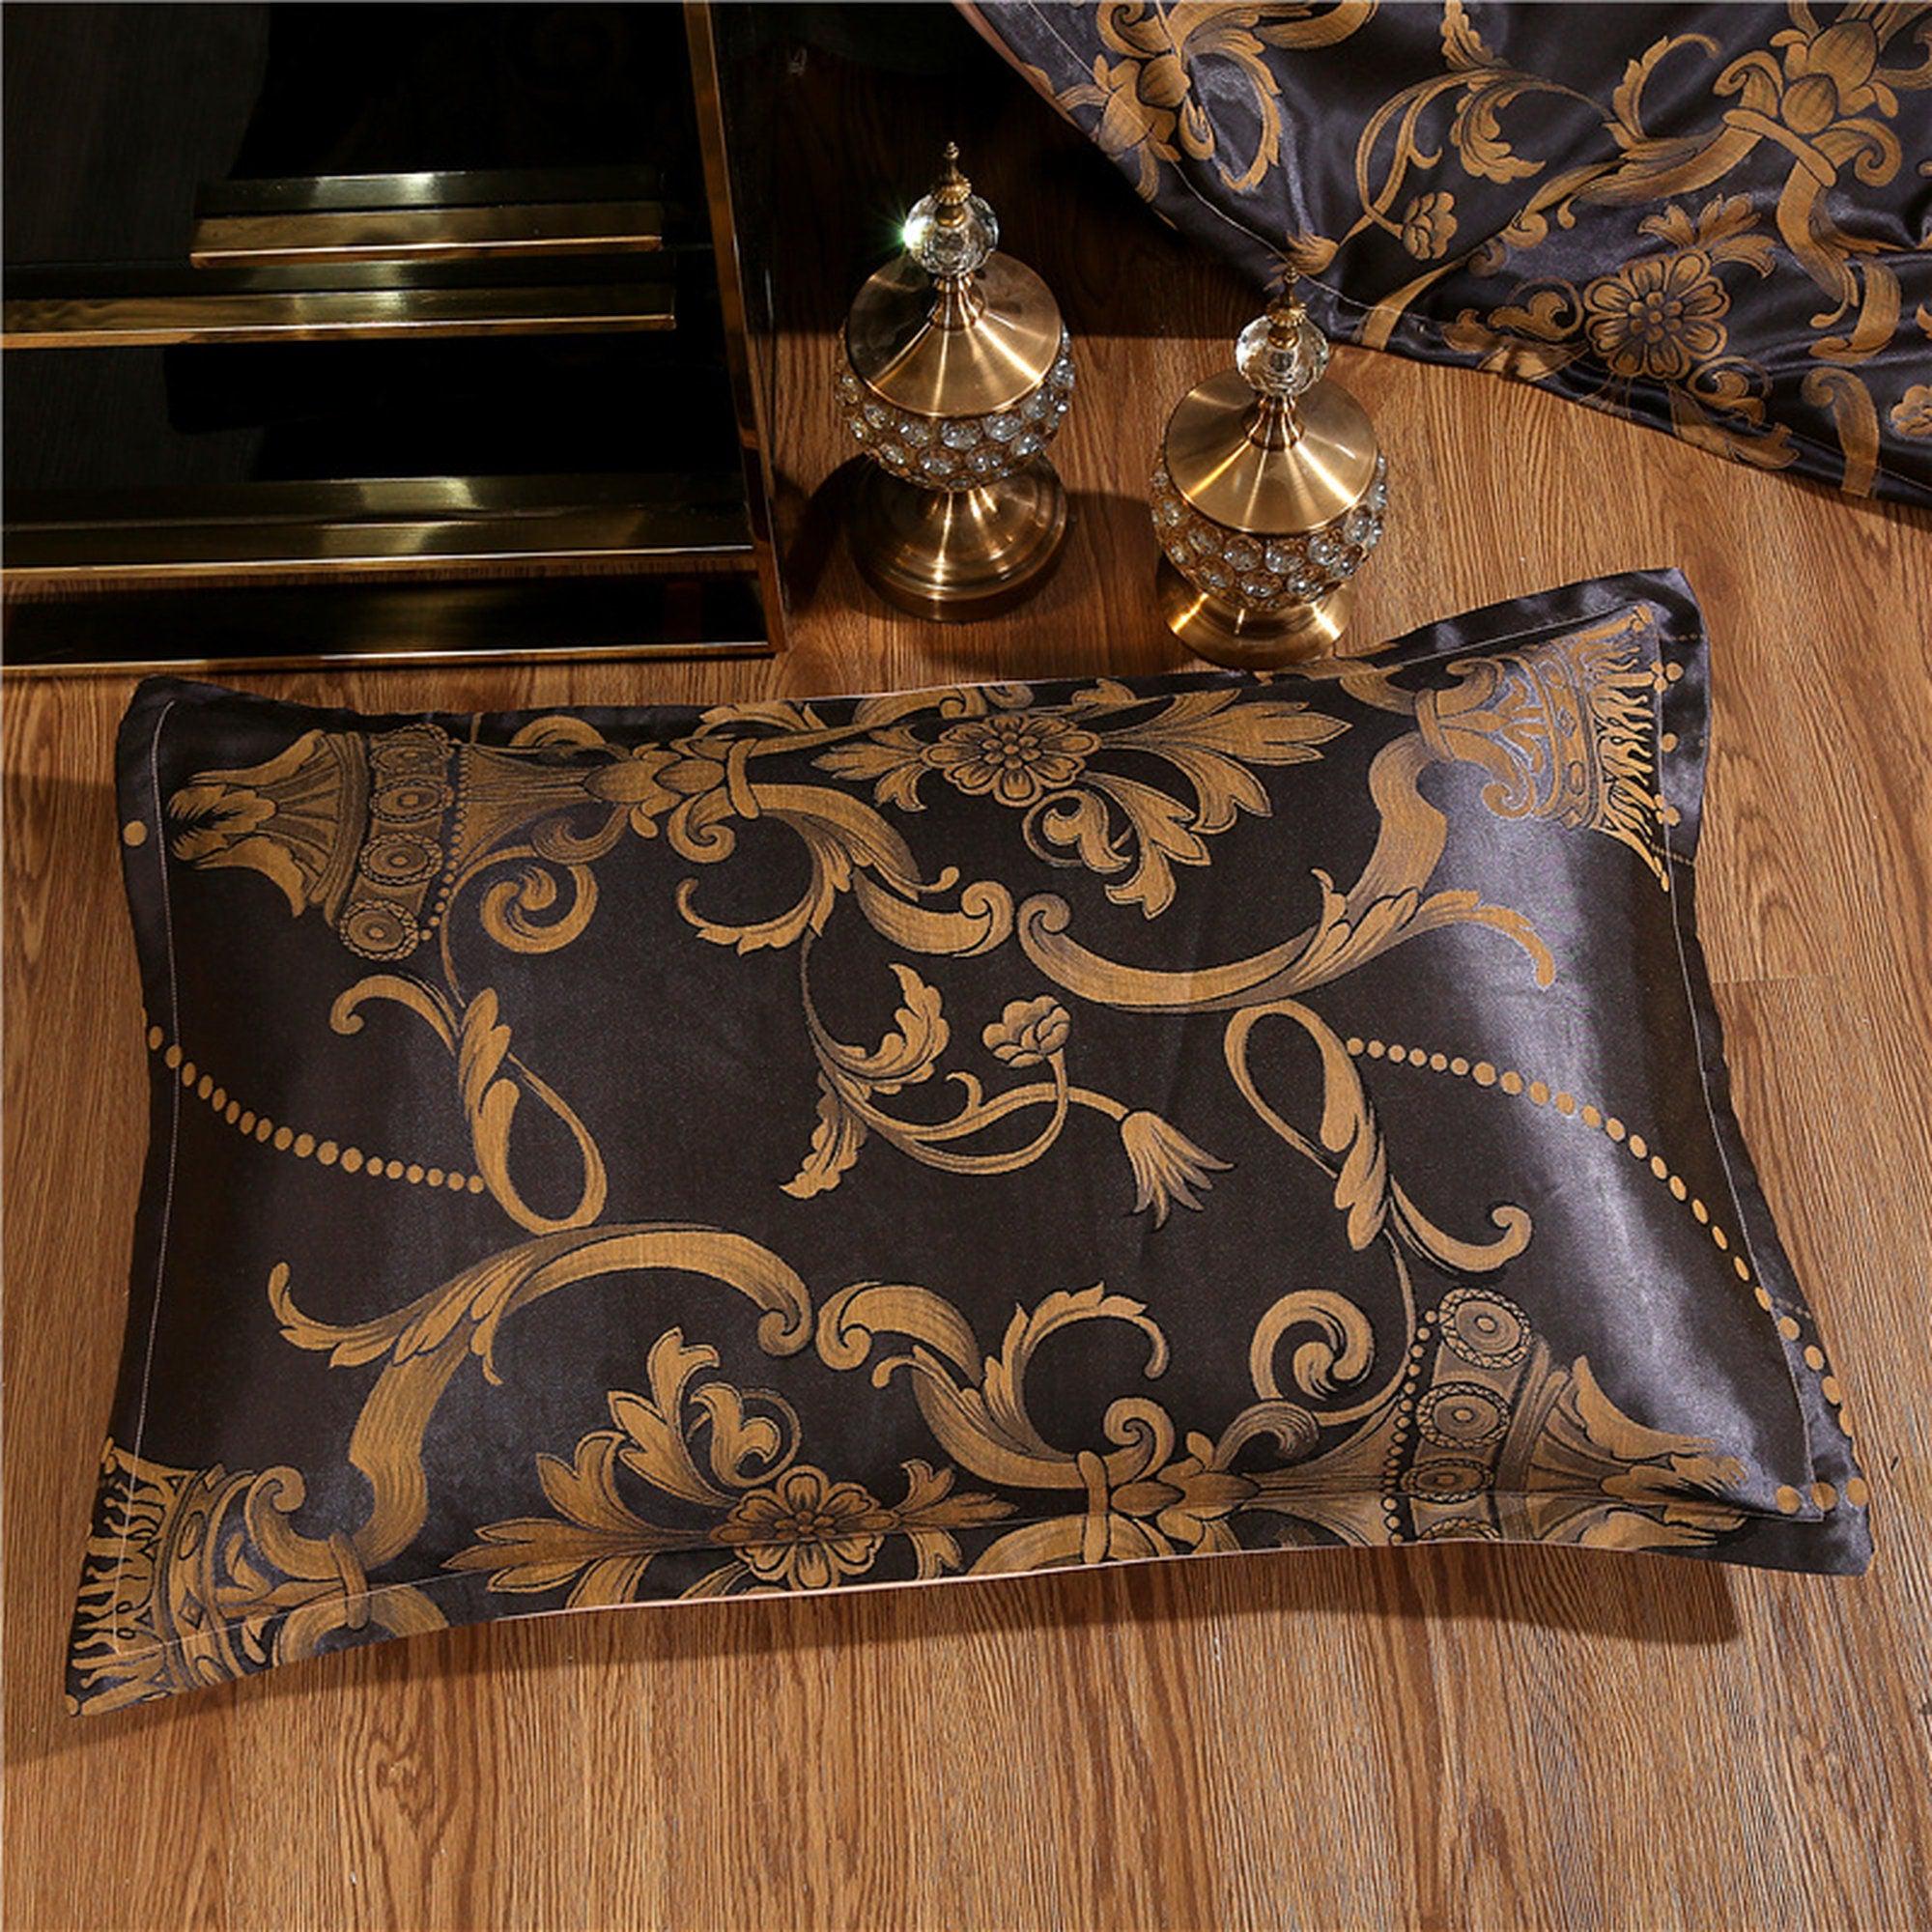 daintyduvet Luxury Duvet Cover Set, Jacquard Fabric Aesthetic Bedding Decorative, Embroidered Bedding Set